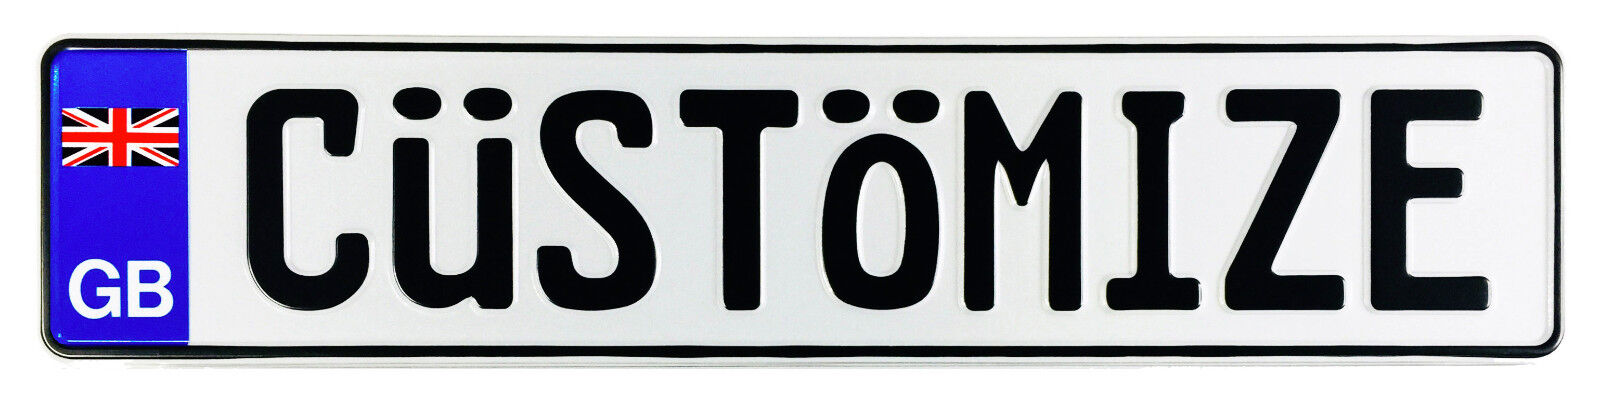 Great Britain Custom License Plate